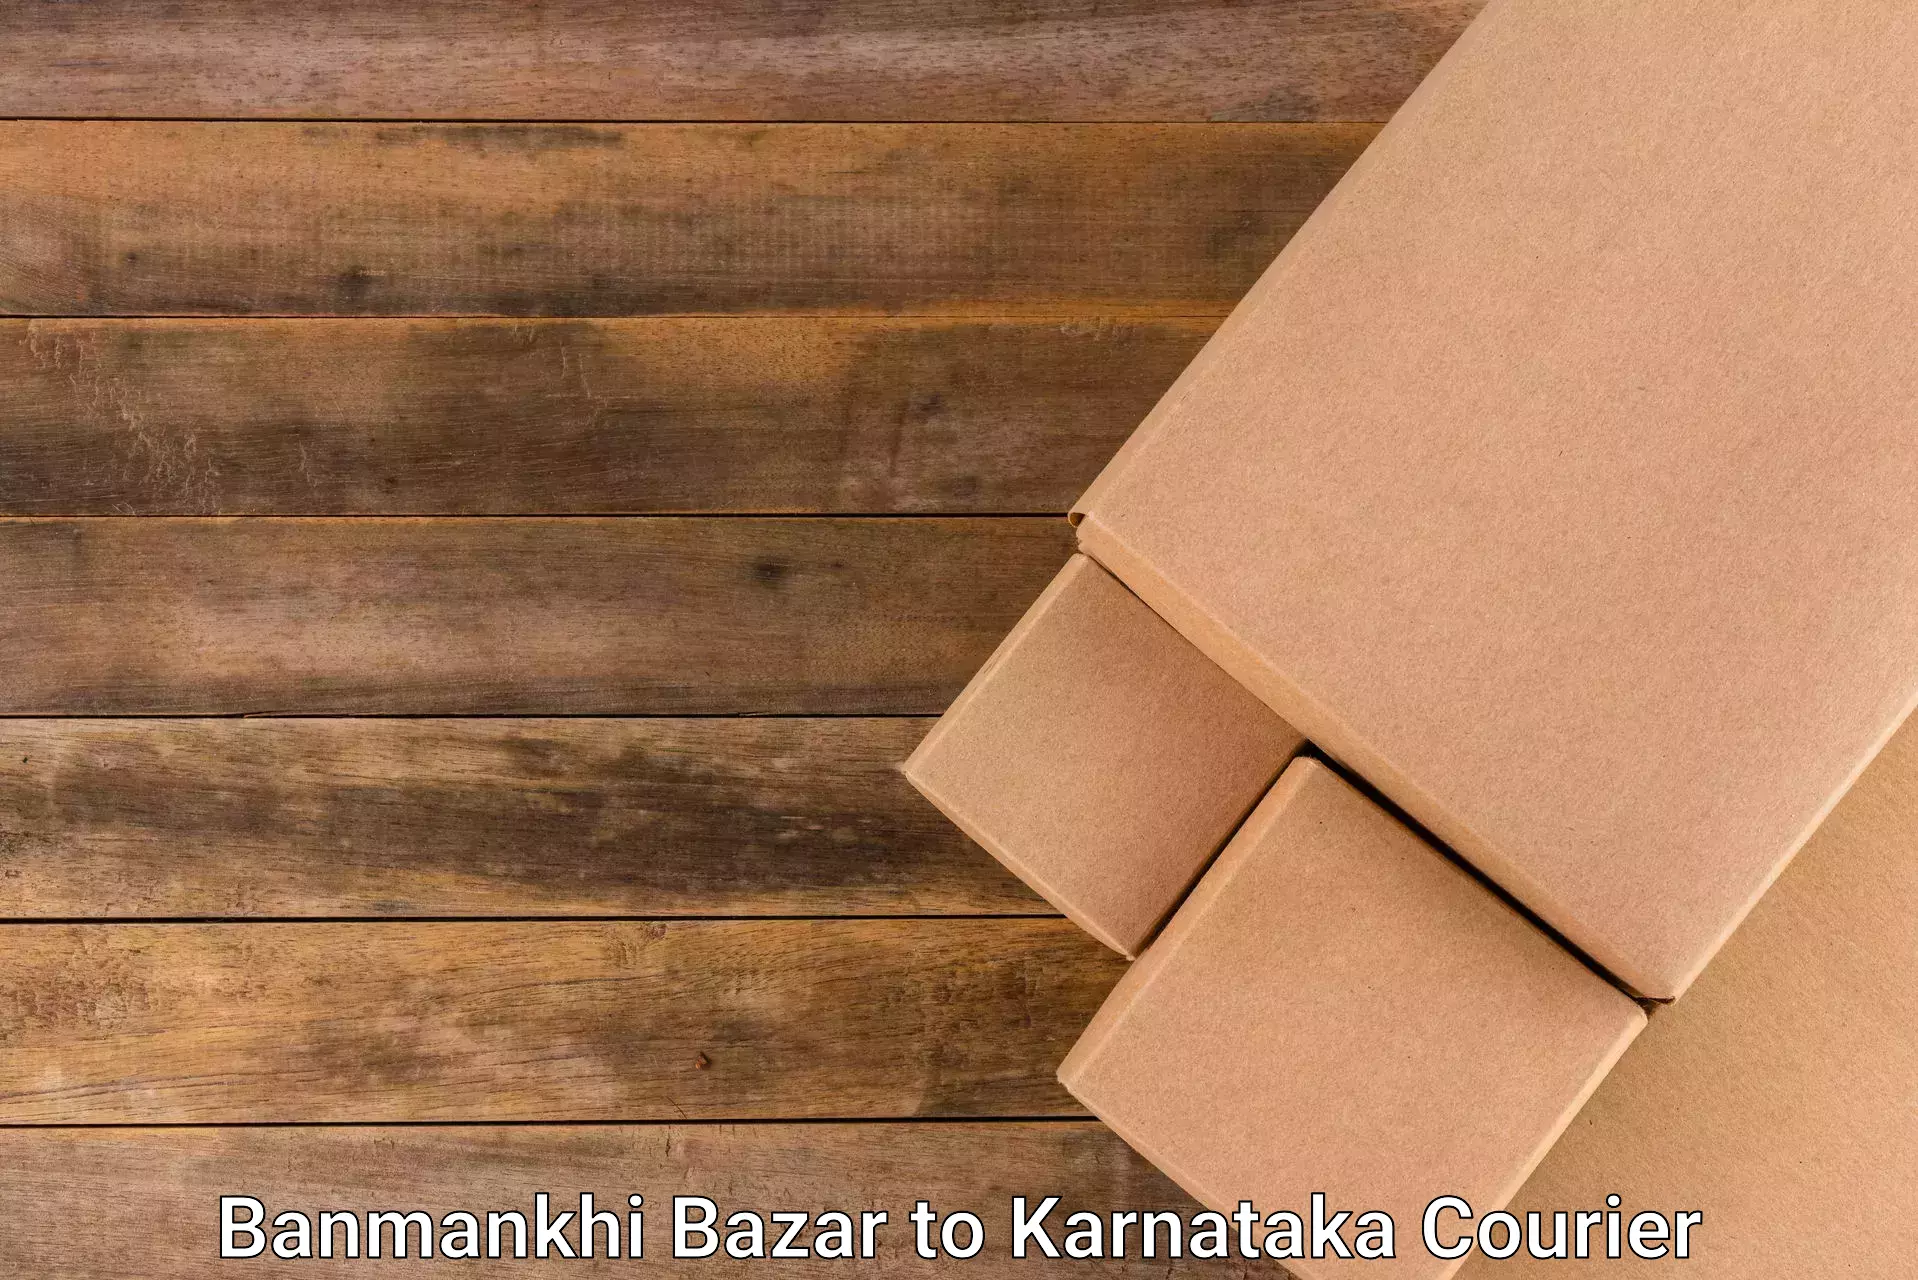 Efficient shipping operations Banmankhi Bazar to Karnataka